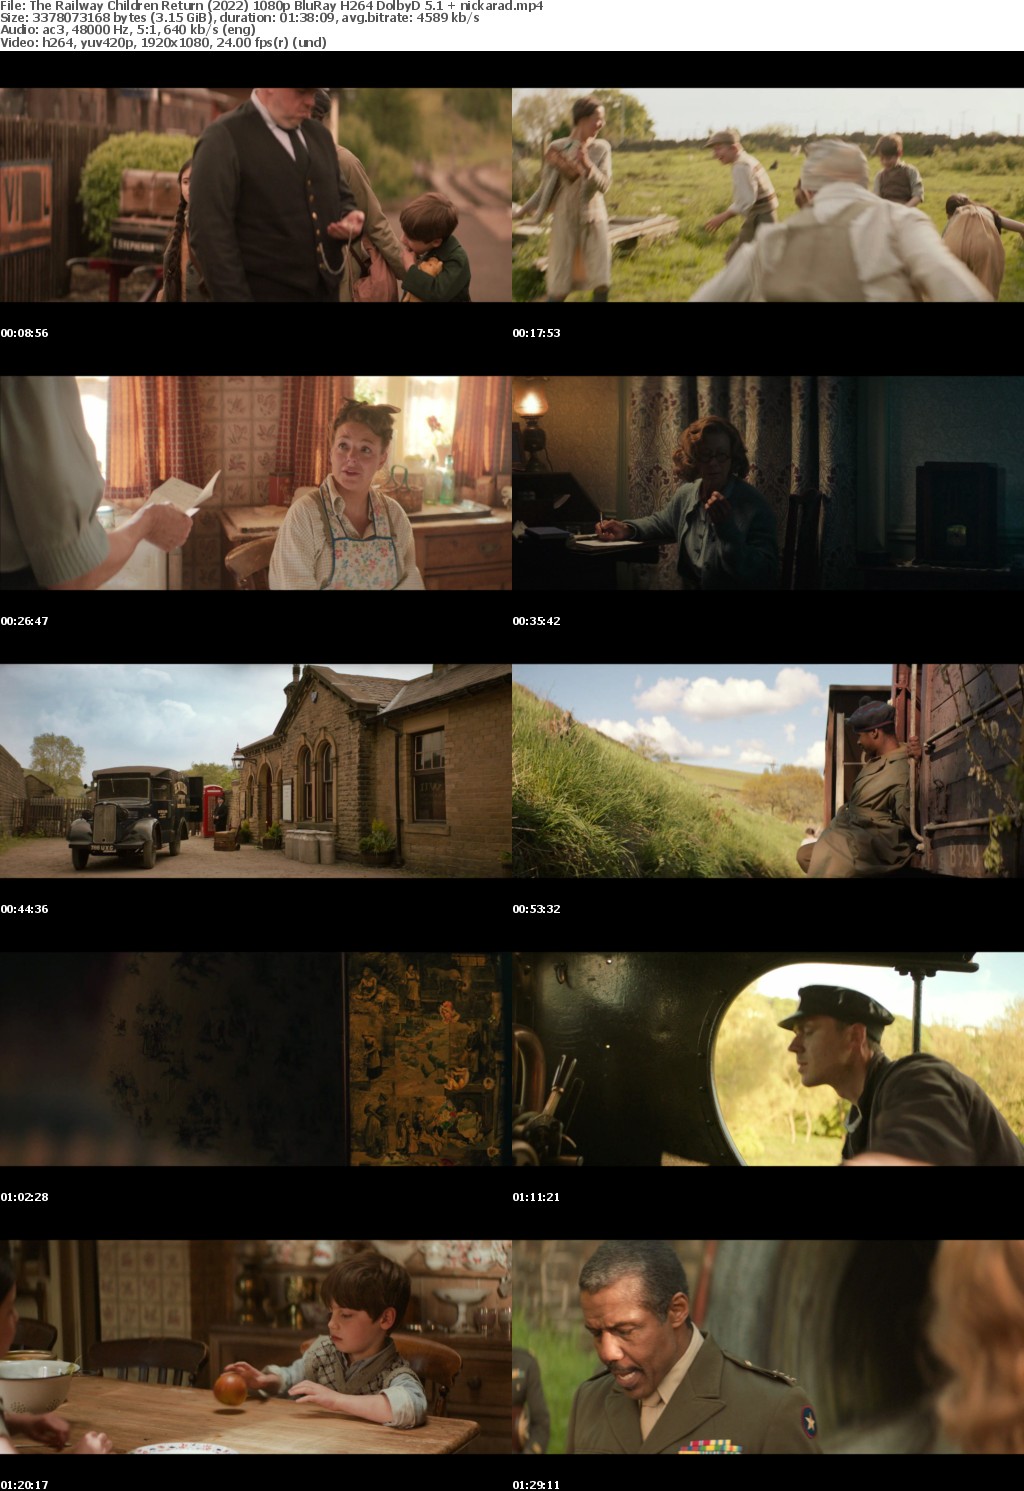 The Railway Children Return (2022) 1080p BluRay H264 DolbyD 5 1 nickarad